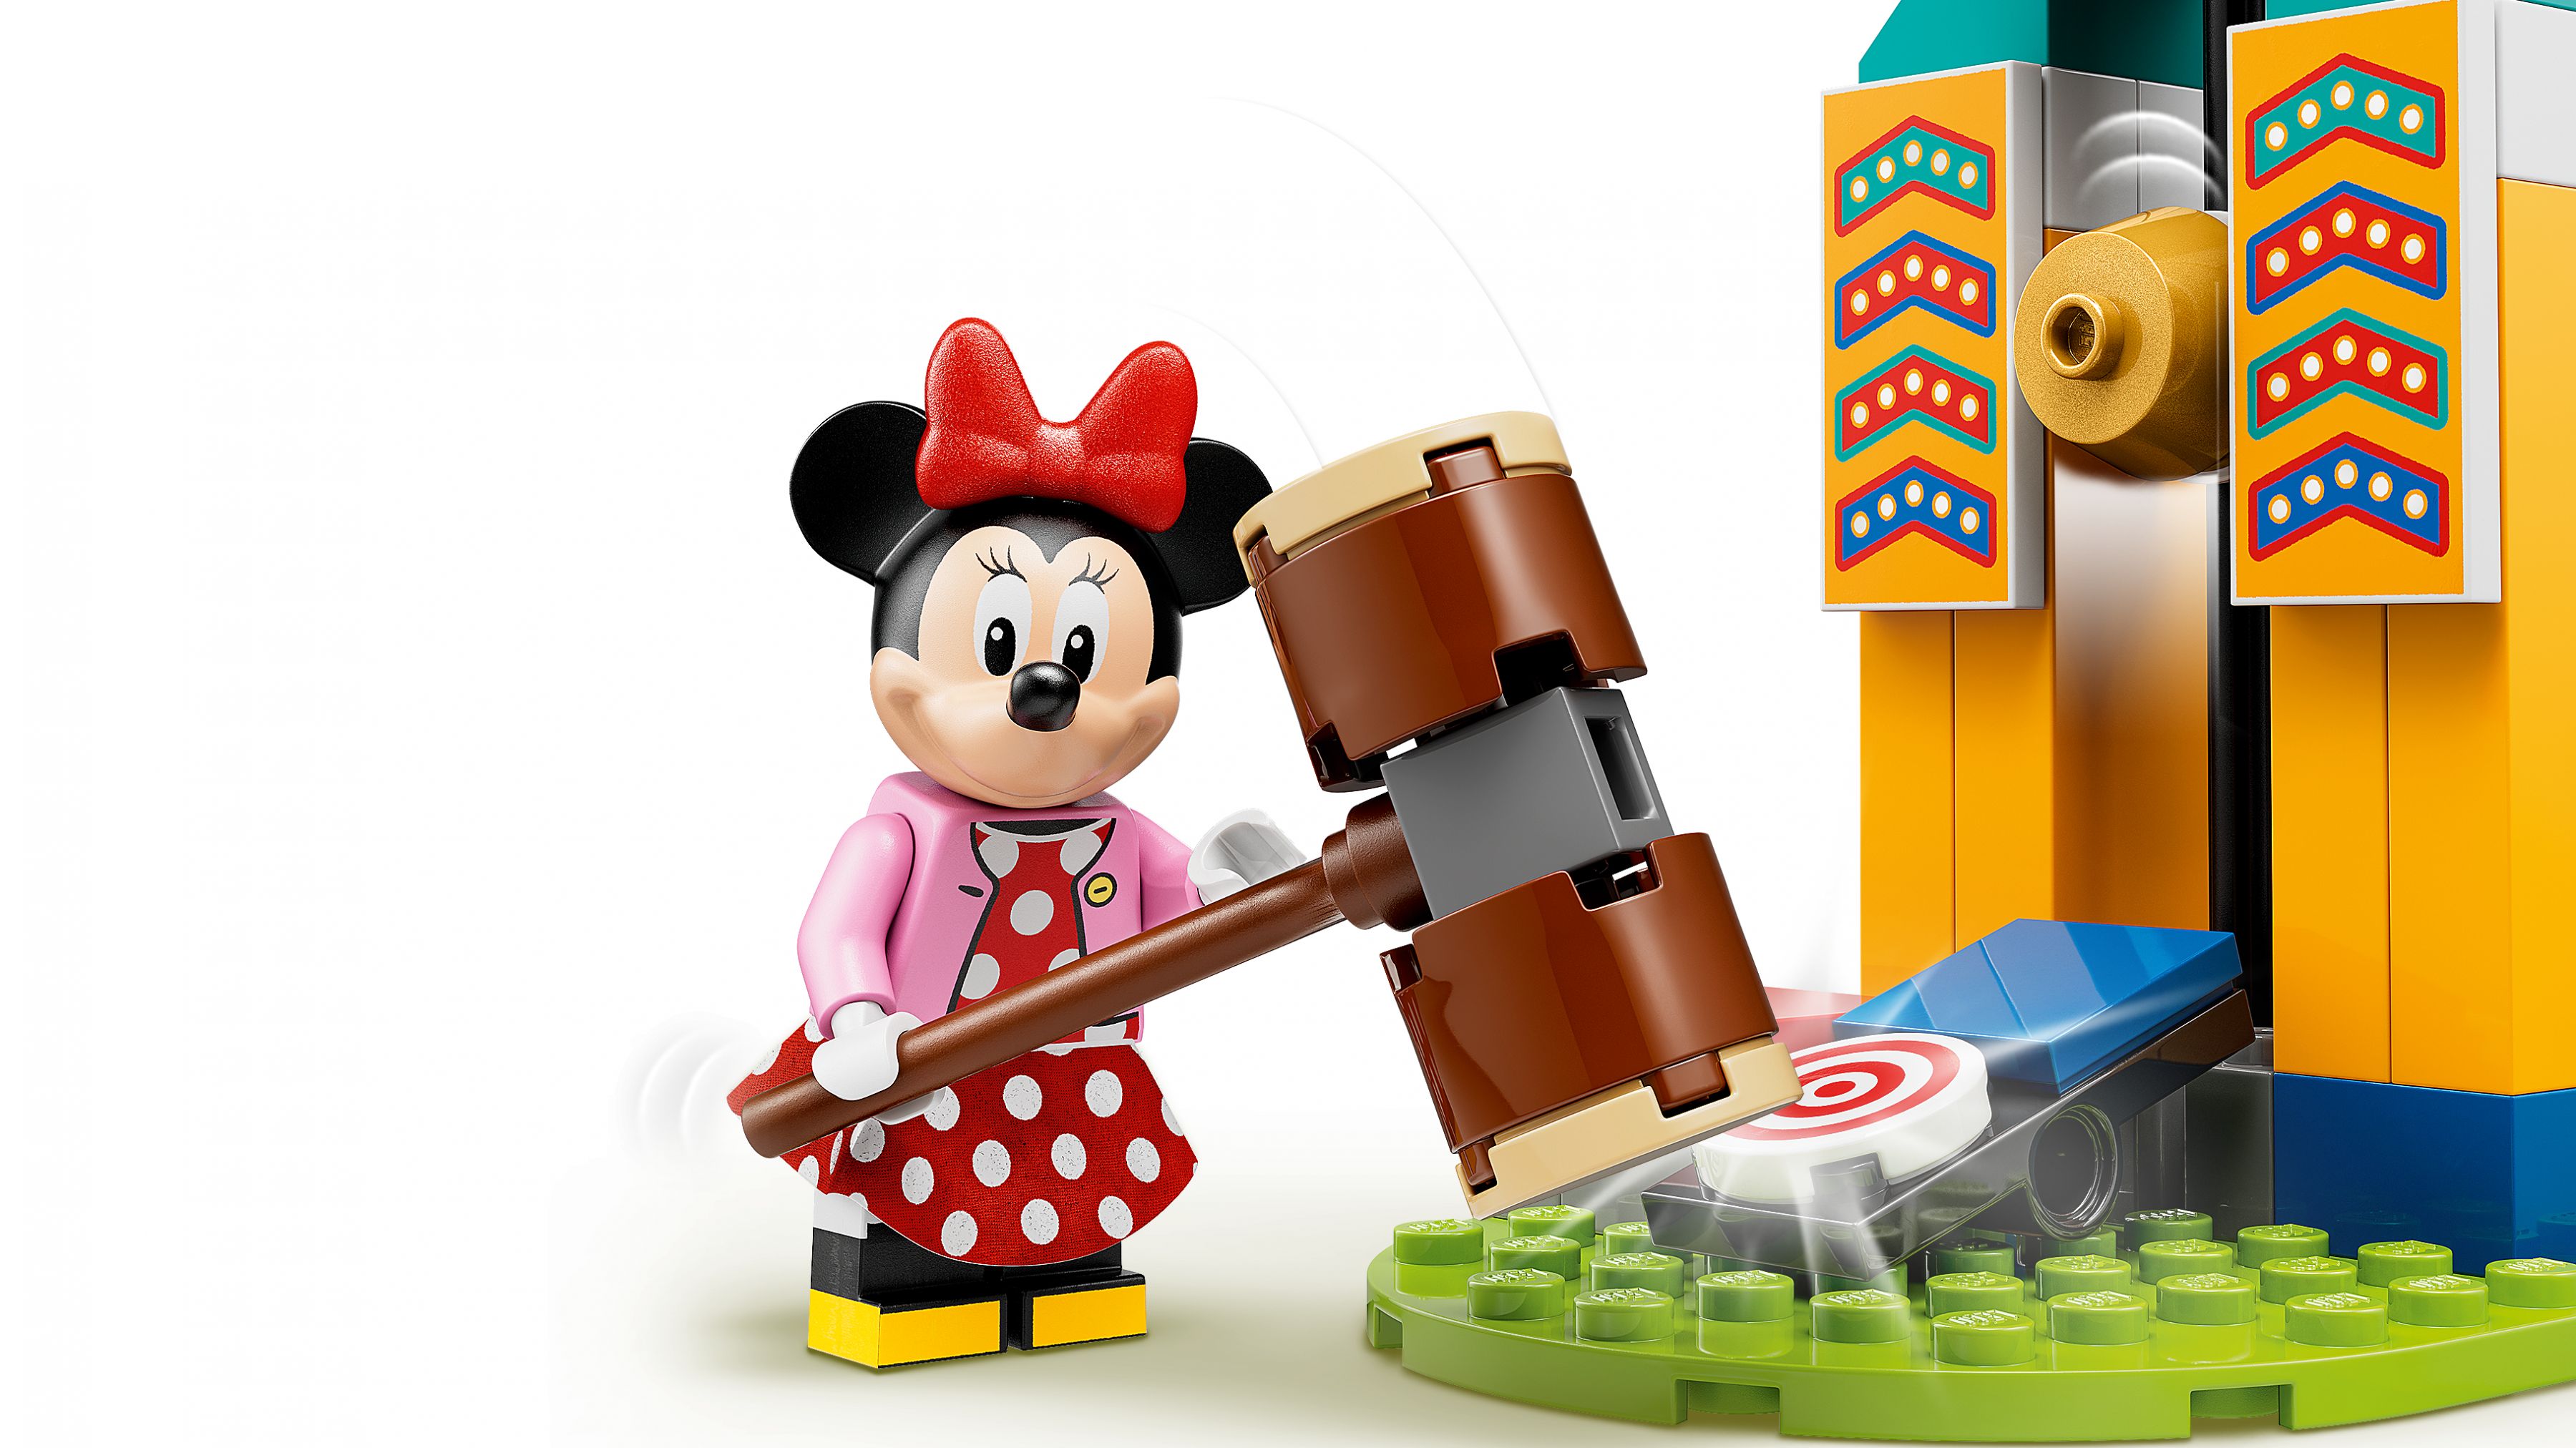 LEGO Disney 10778 Micky, Minnie und Goofy auf dem Jahrmarkt LEGO_10778_WEB_SEC03_NOBG.jpg